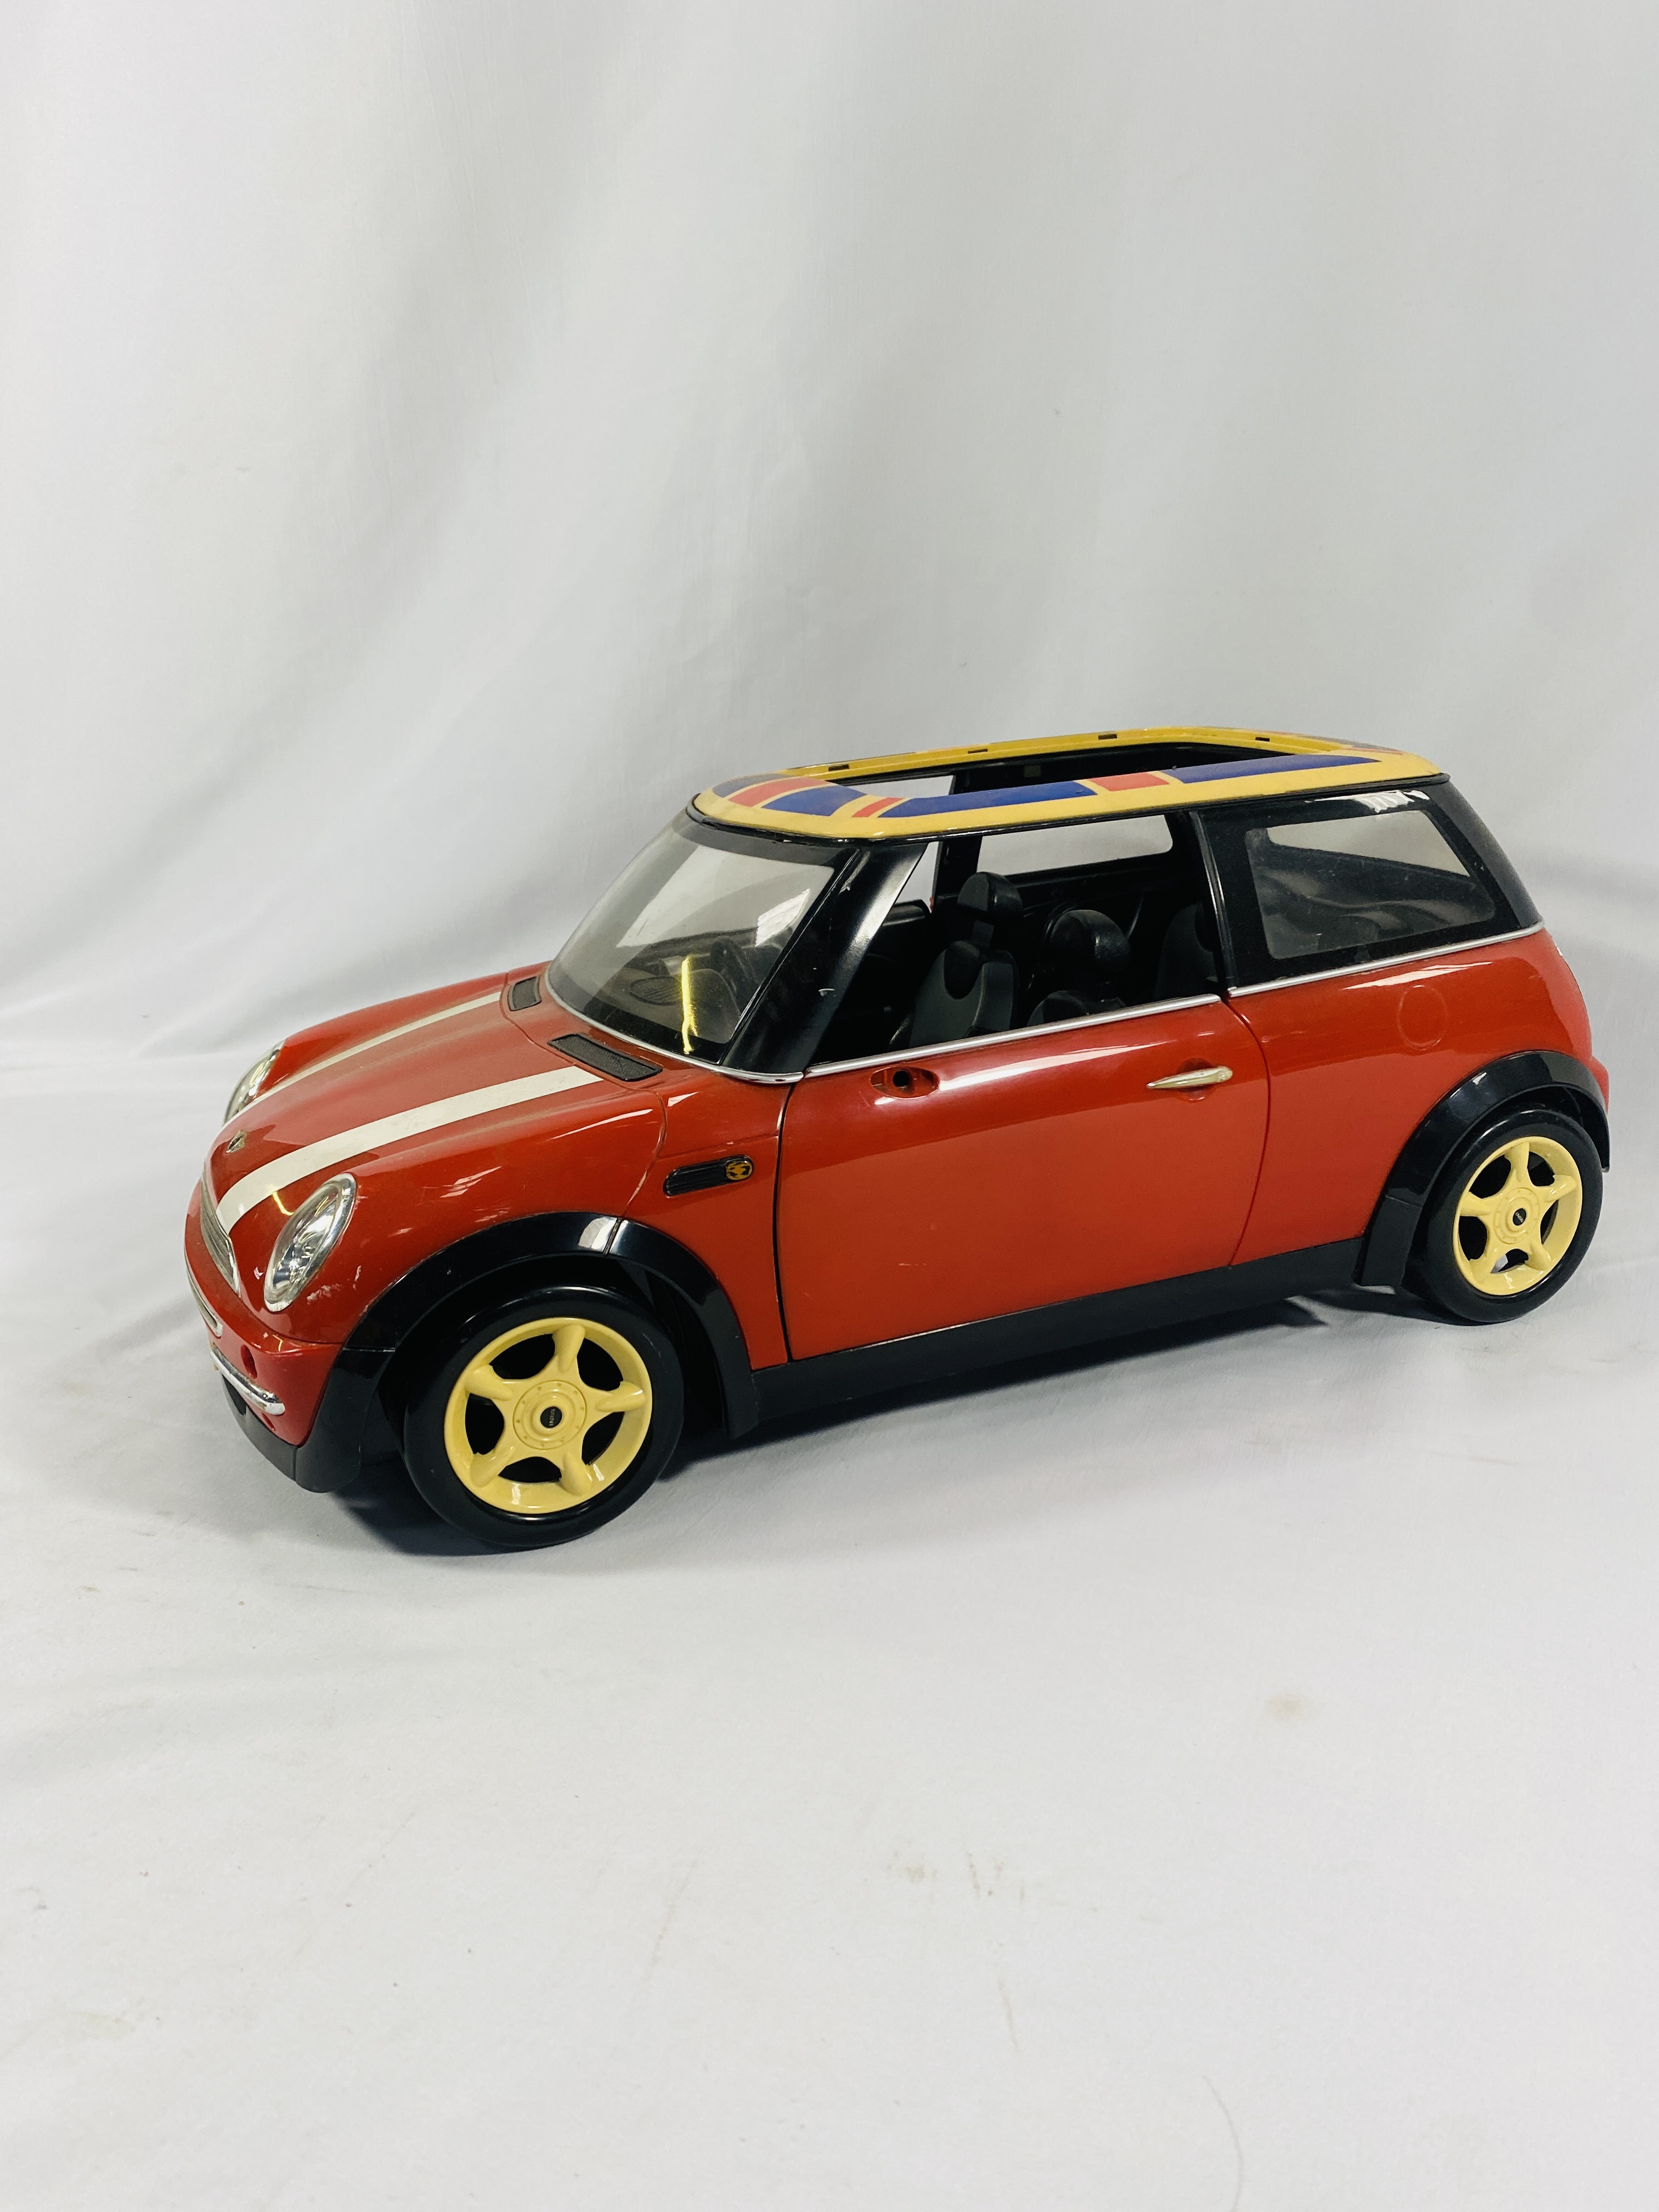 Pedigree toys Mini Cooper - Image 2 of 6